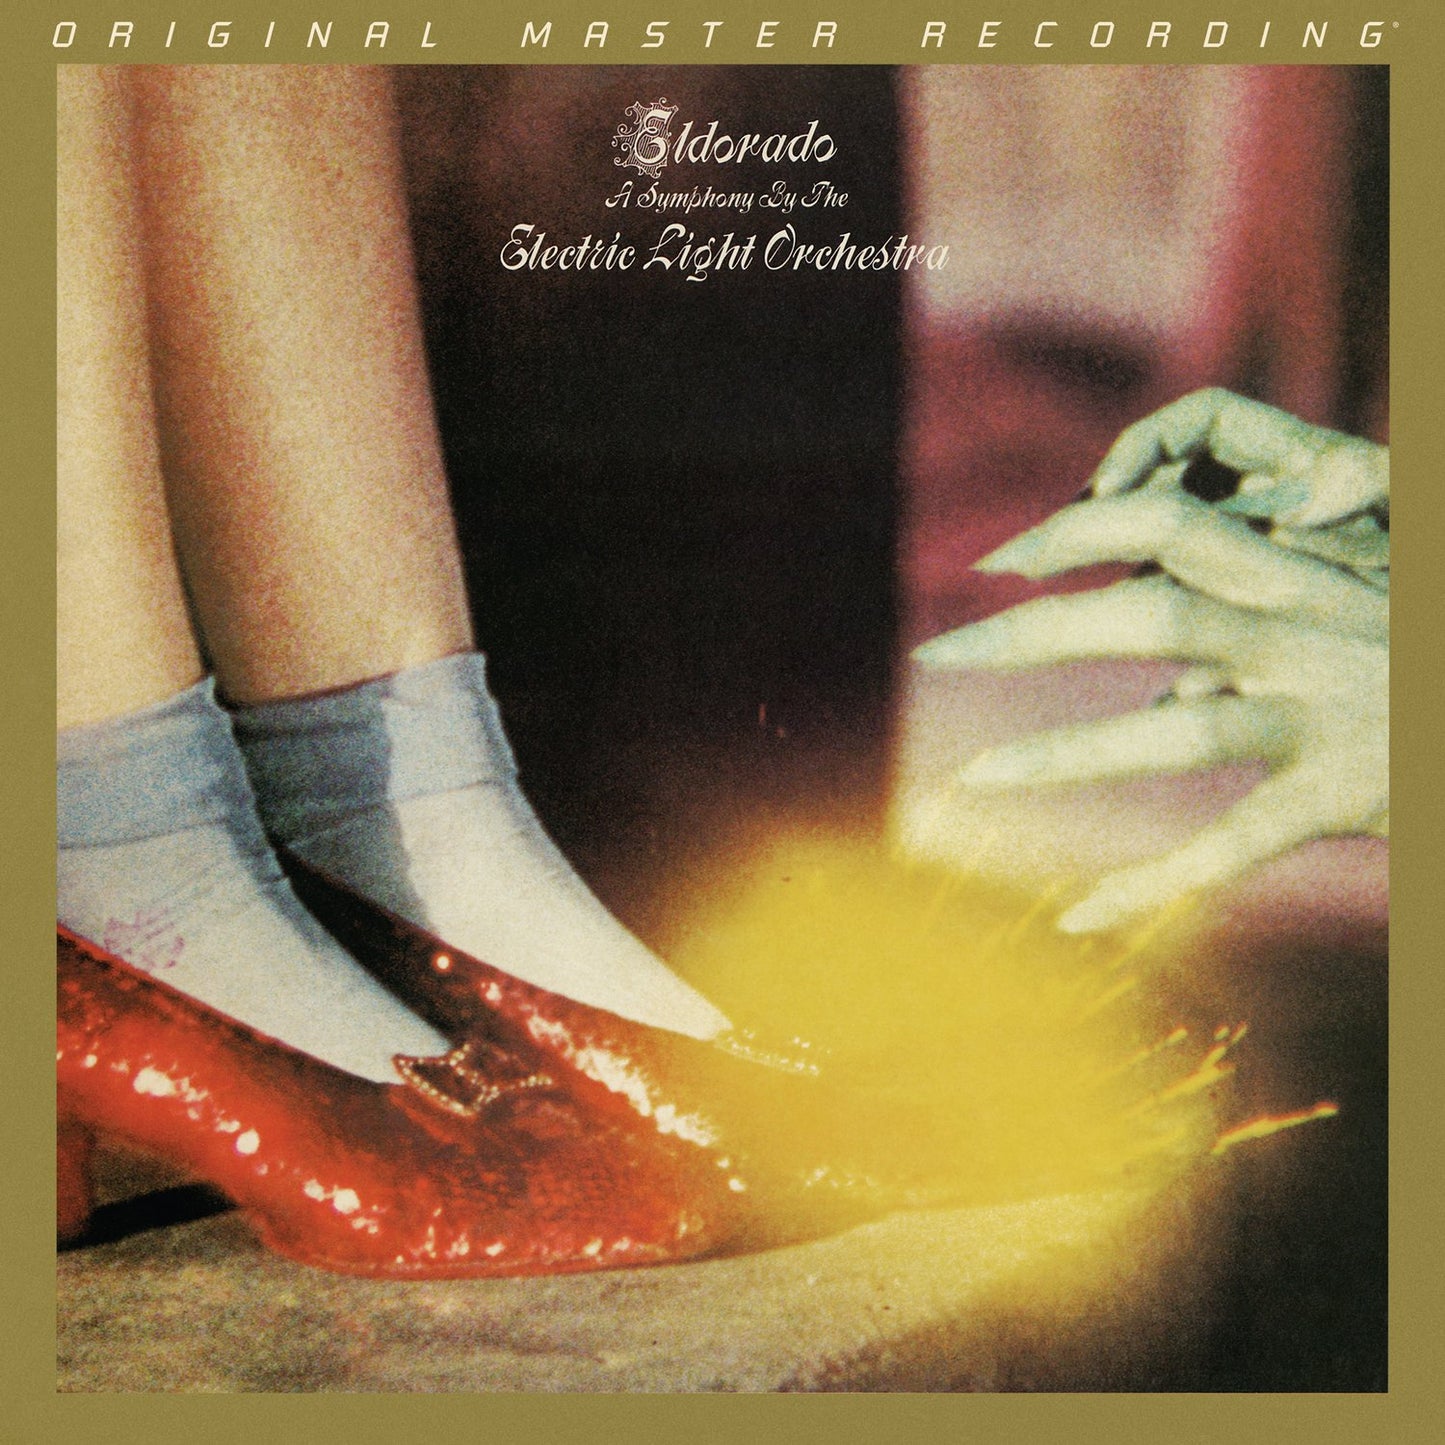 Electric Light Orchestra – Eldorado – MFSL Supervinyl LP 